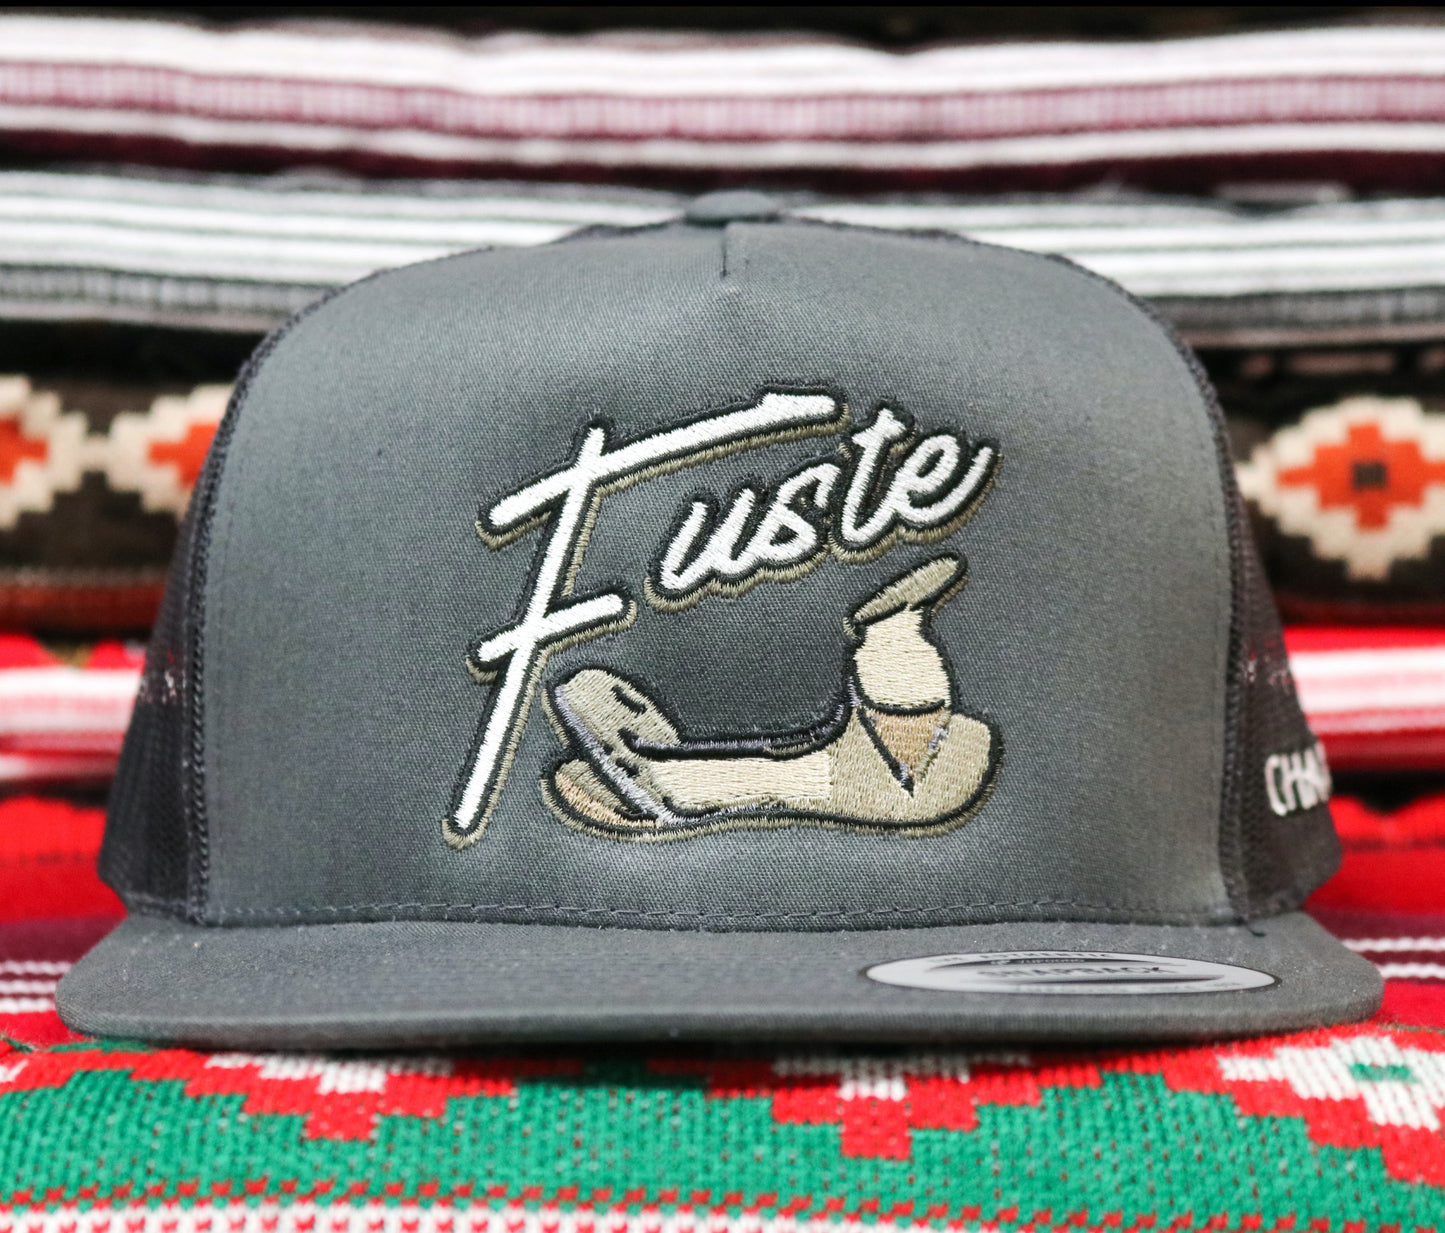 Gray  "Fuste" Original Trucker Hat